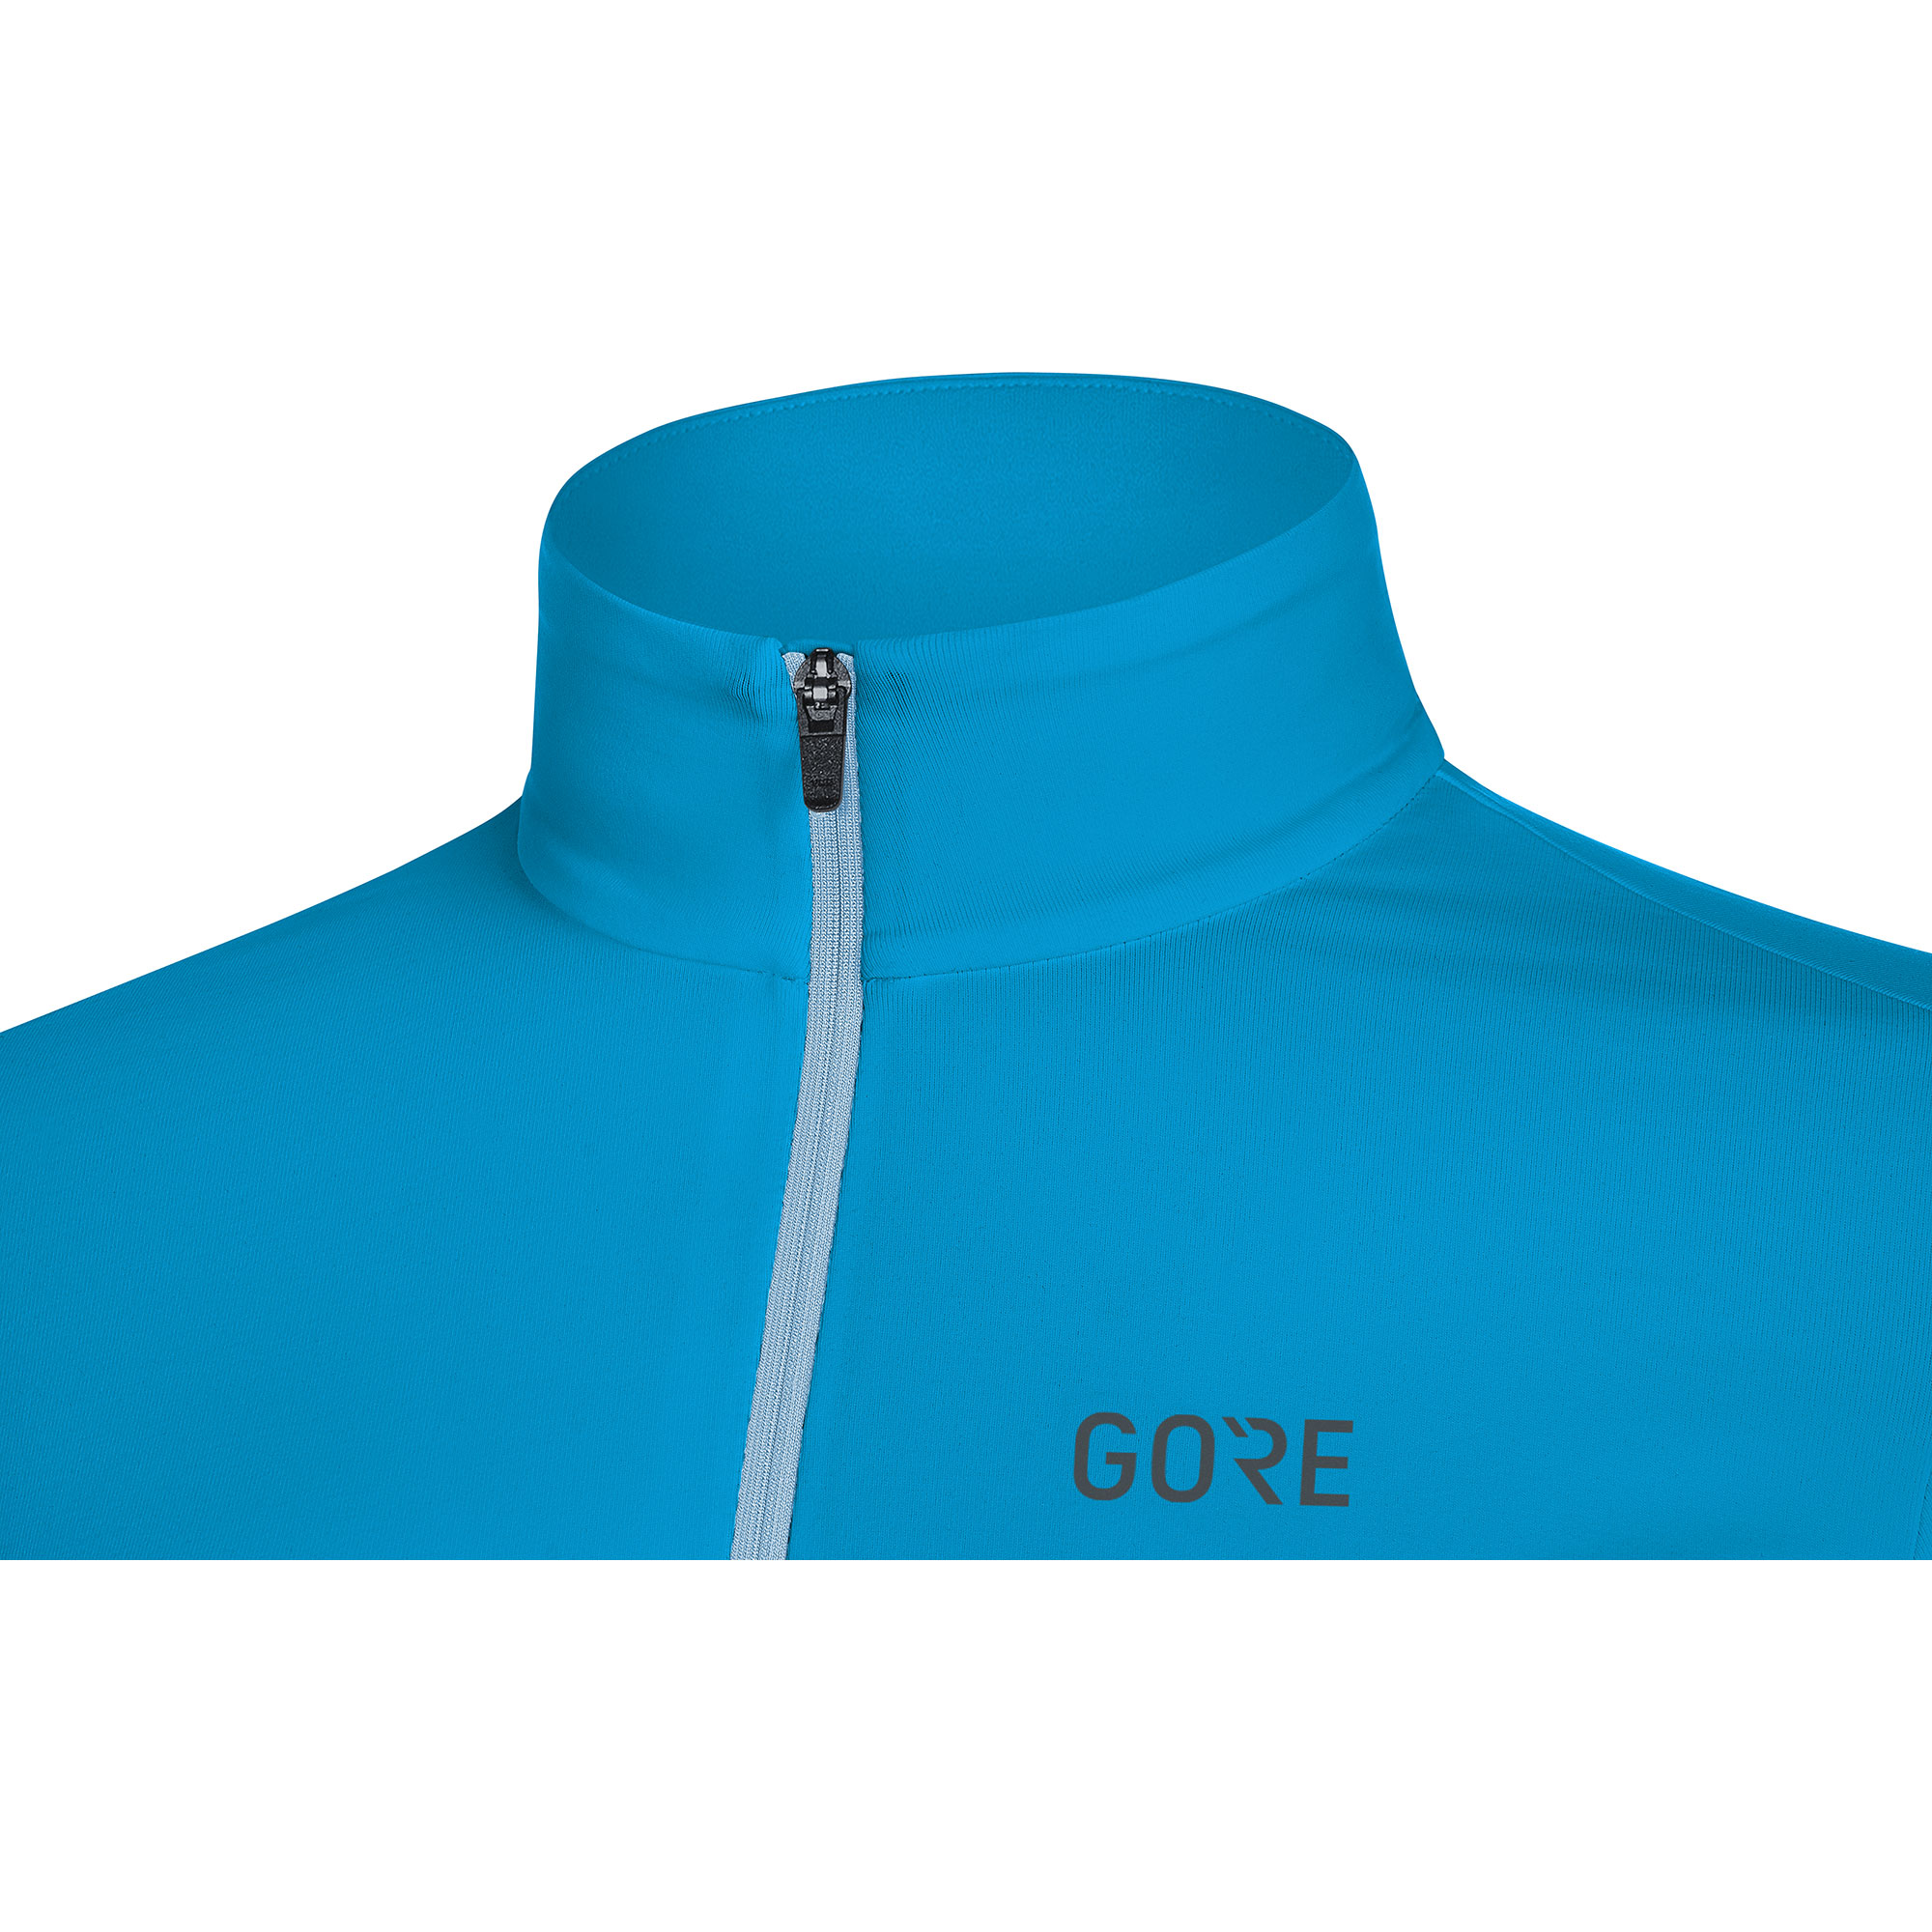 Details about   Gore R3 Ls Shirt W  100078 AK00/ Women's Mountain Clothing 